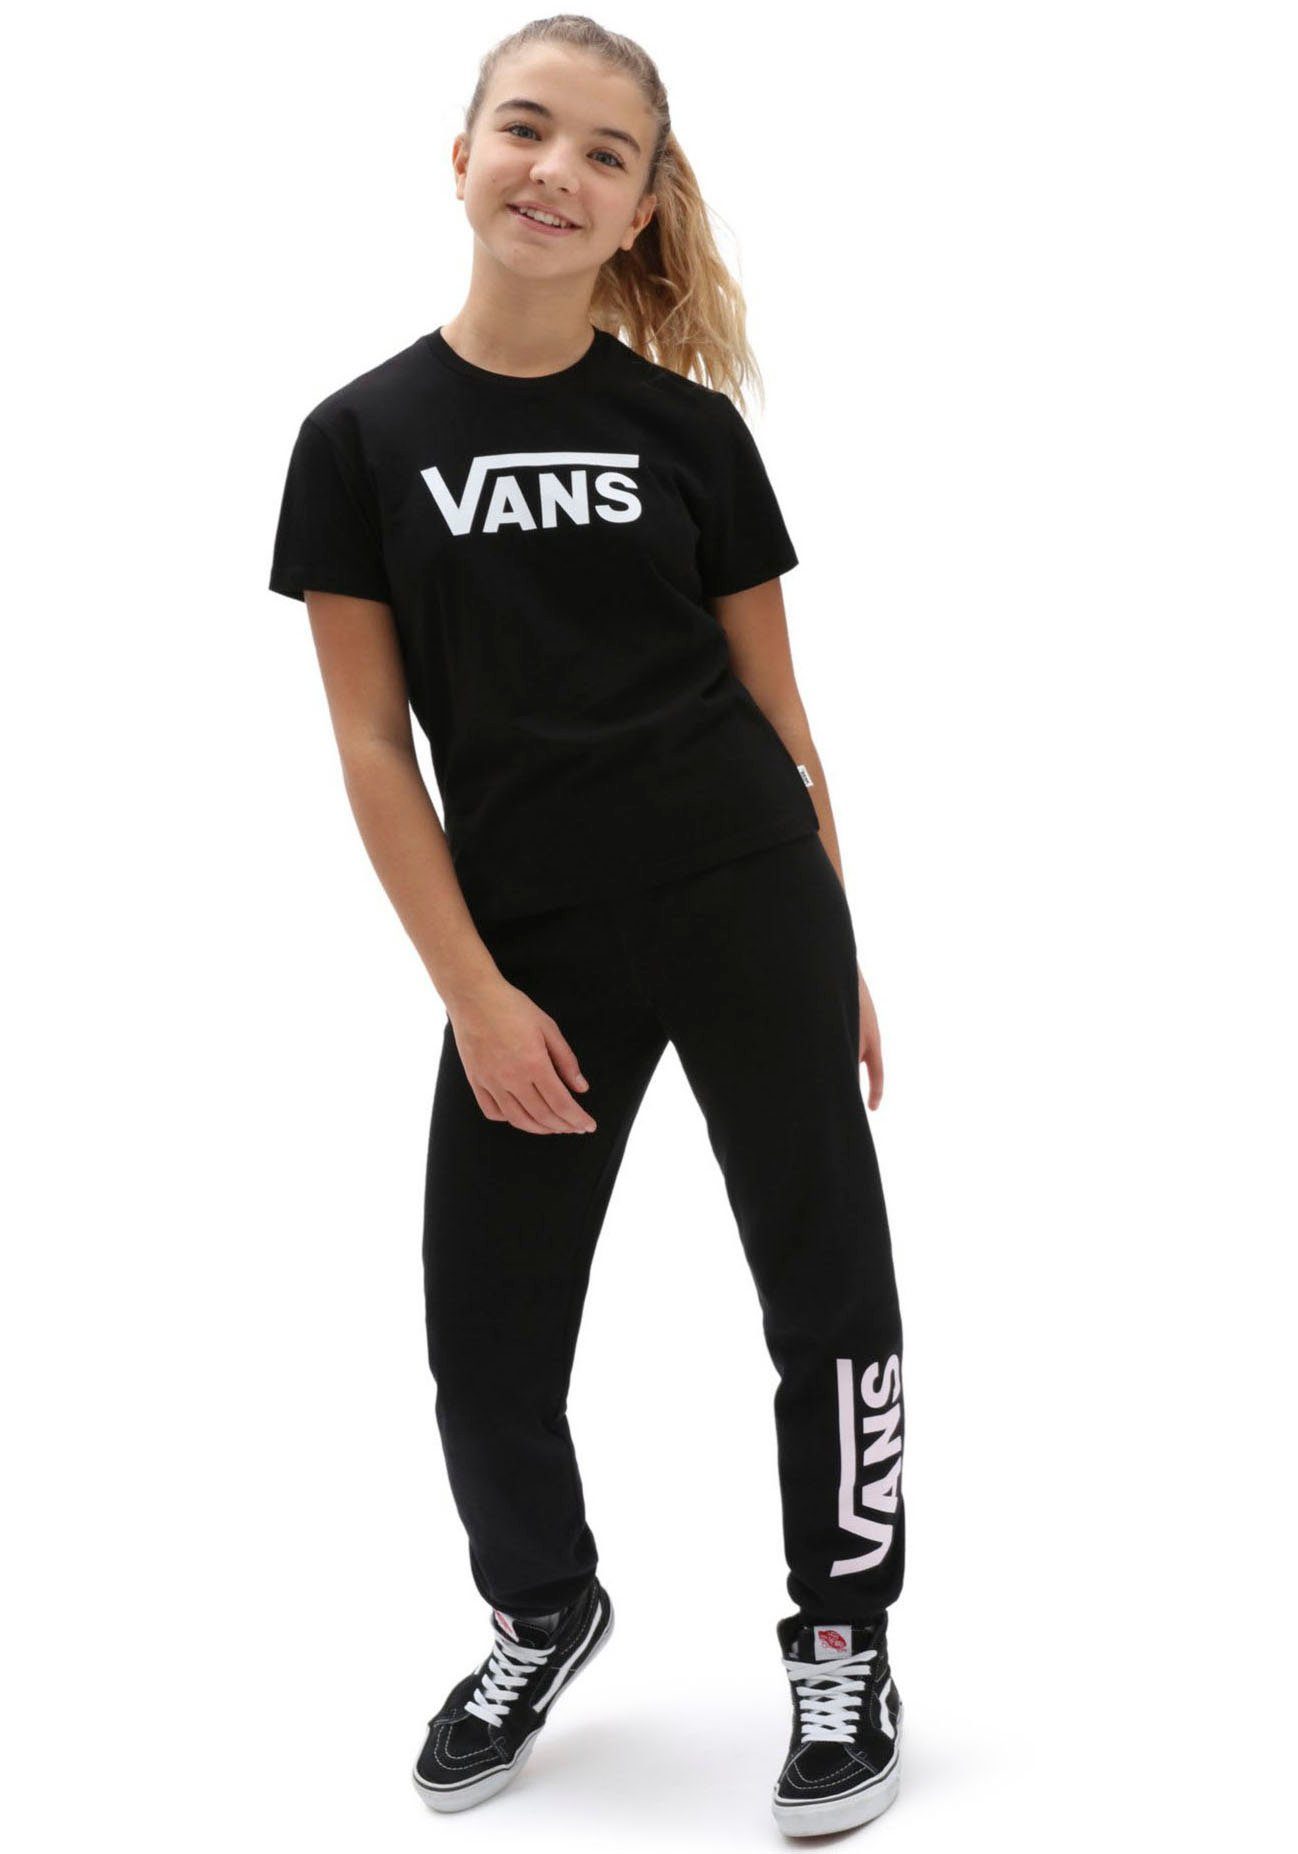 Vans T-Shirt FLYING CREW schwarz-weiß V GIRLS"